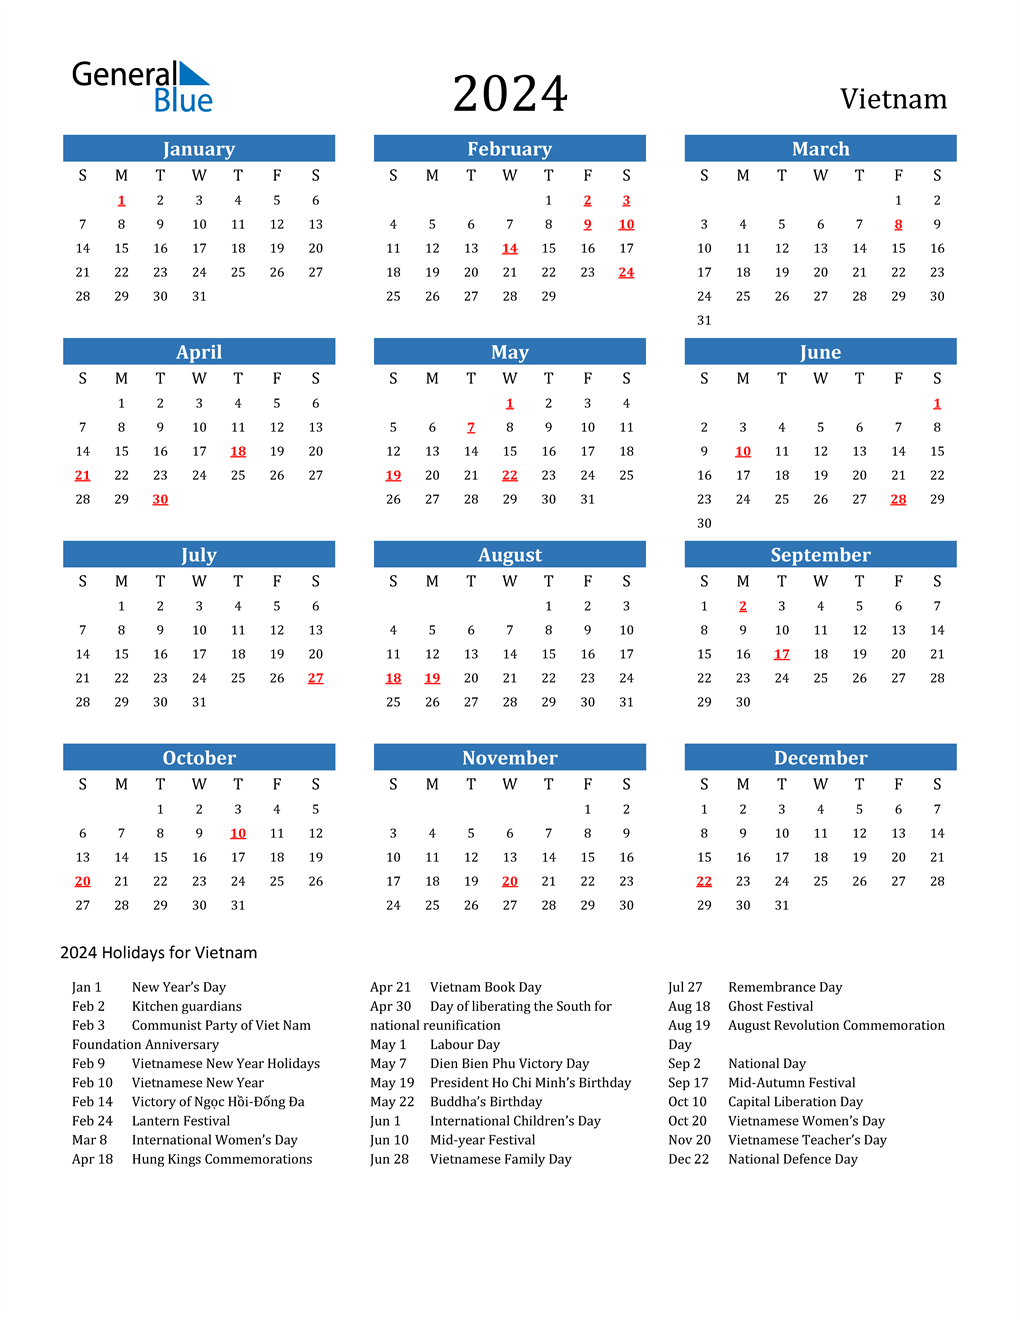 2024 Vietnam Calendar with Holidays